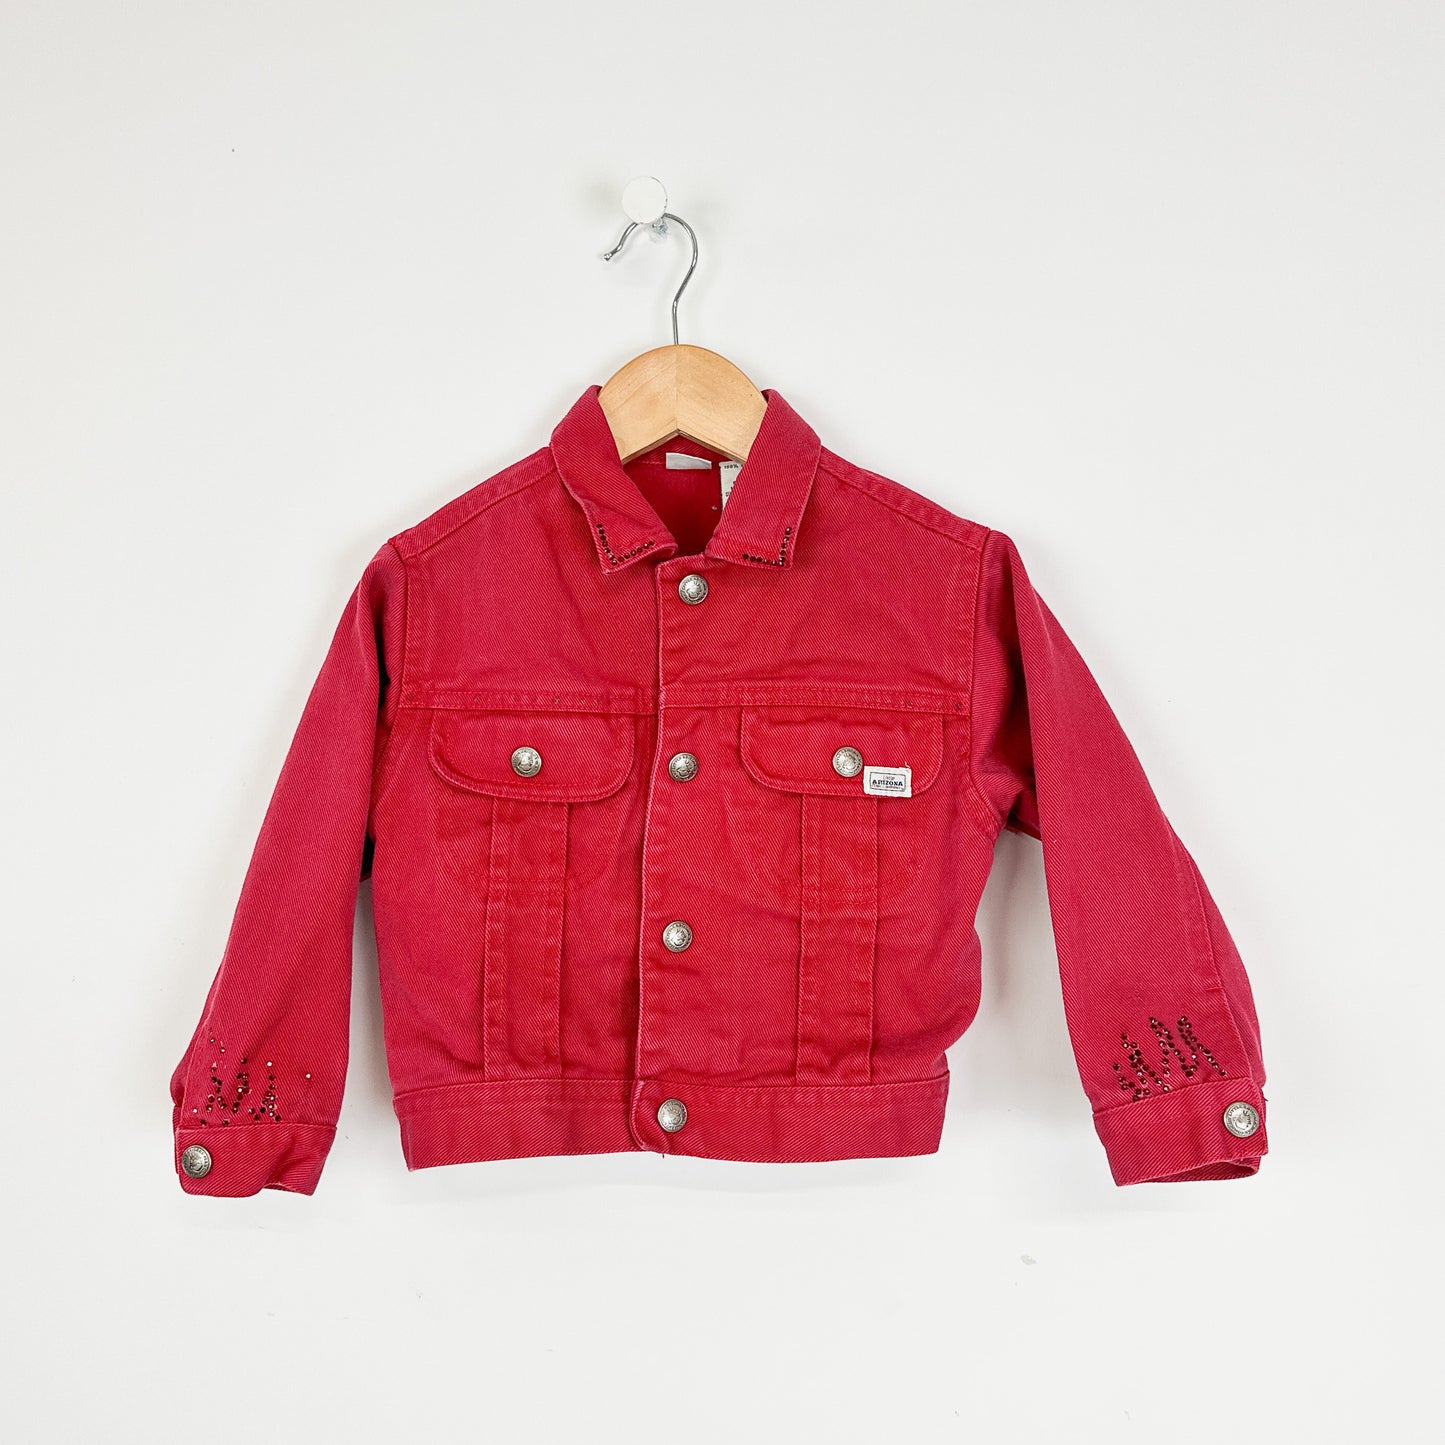 Vintage Bedazzled 'Love' Red Denim Jacket - Size 2-3yr